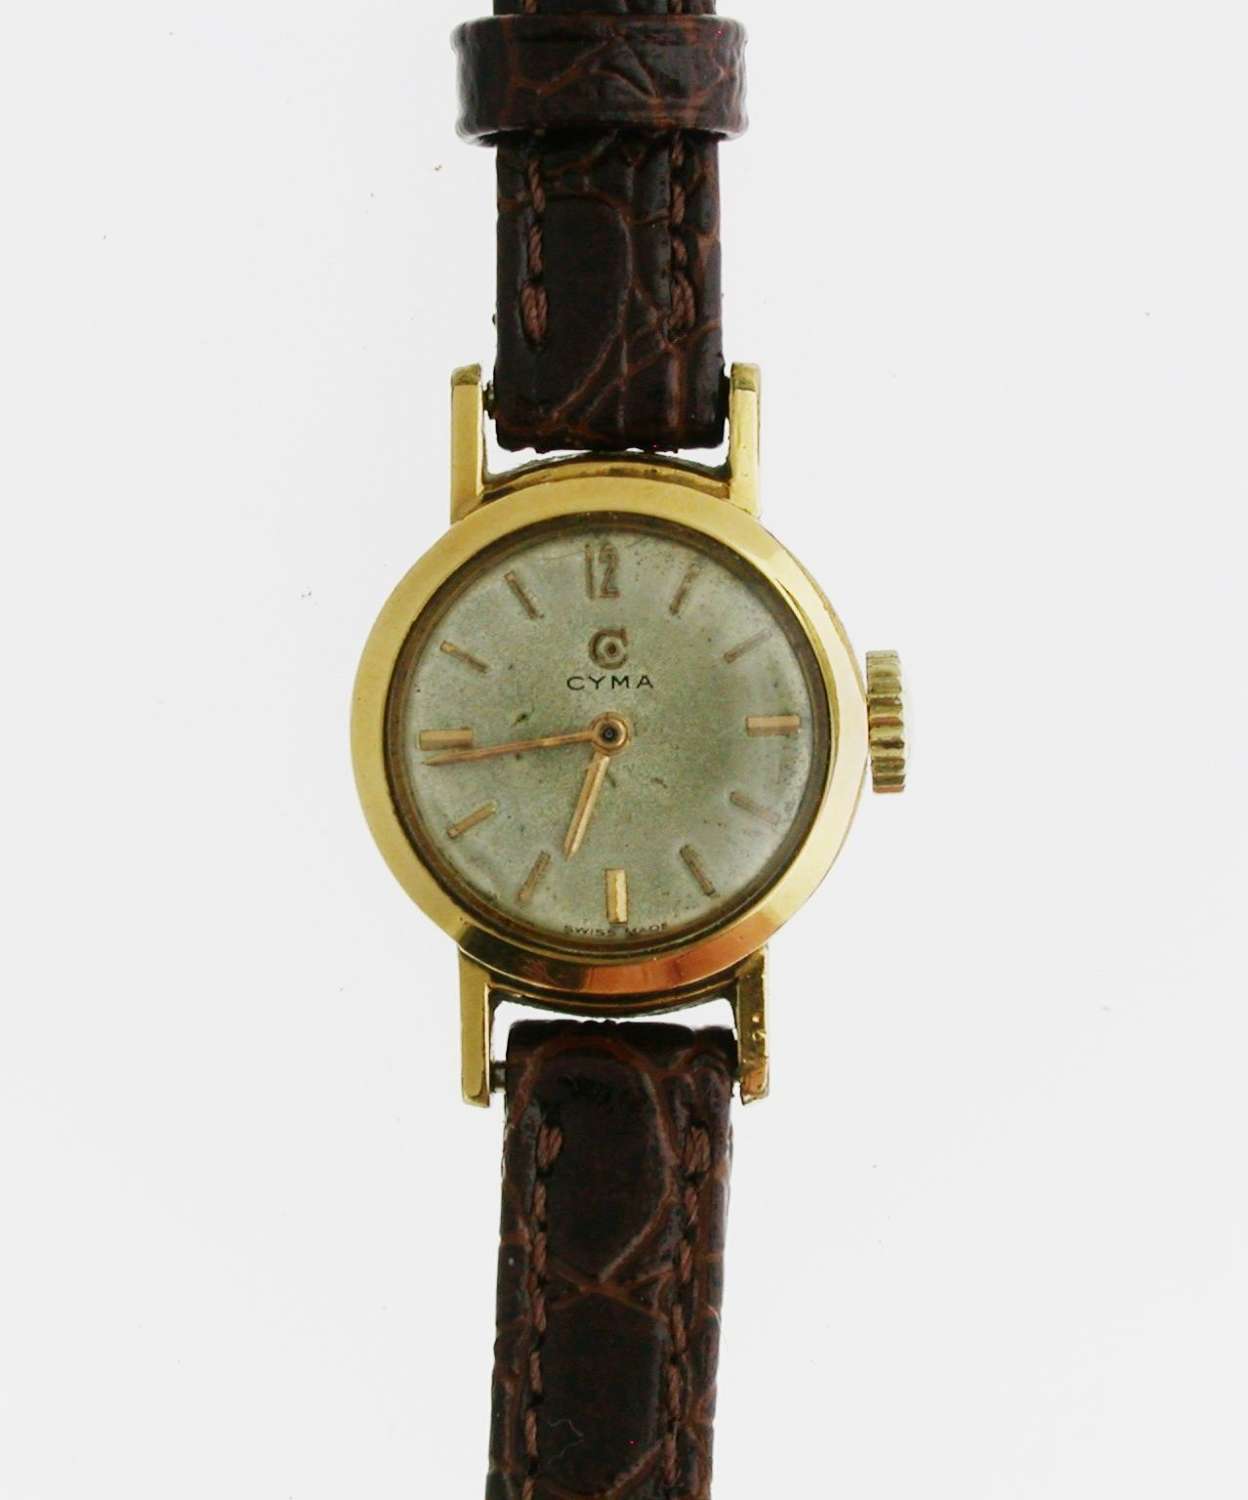 Cyma Ladies Wristwatch Gold Filled Swiss 1960